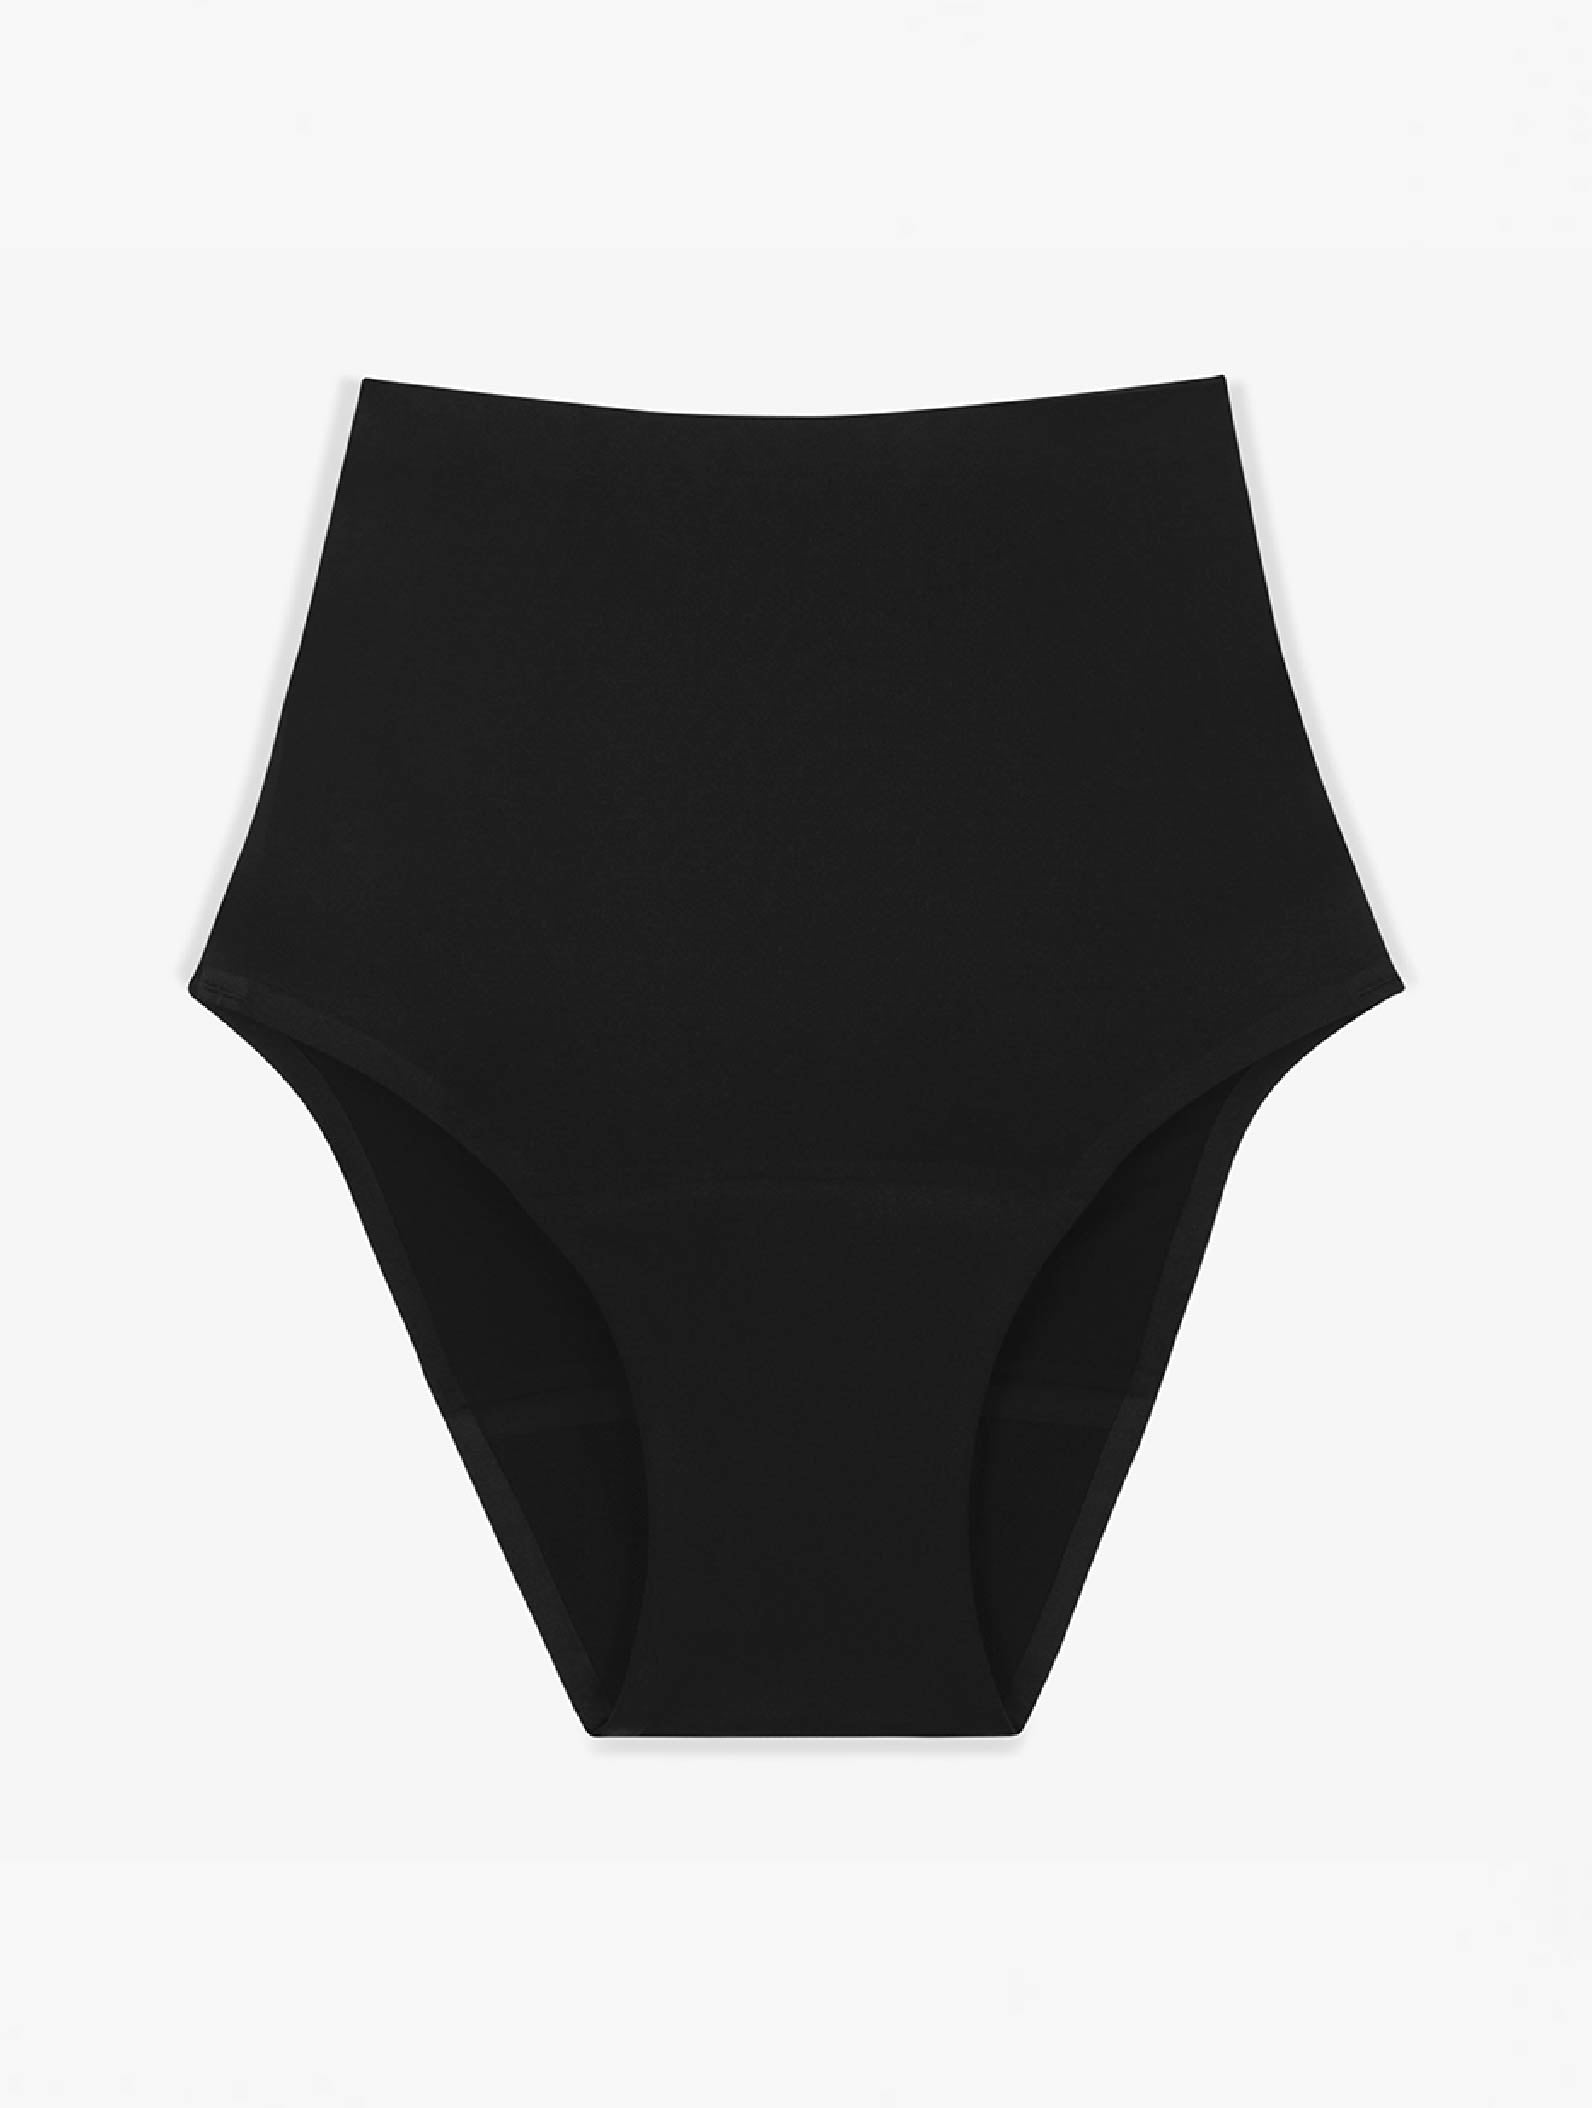 NANNA+ Menstrual panties, high-waist, black